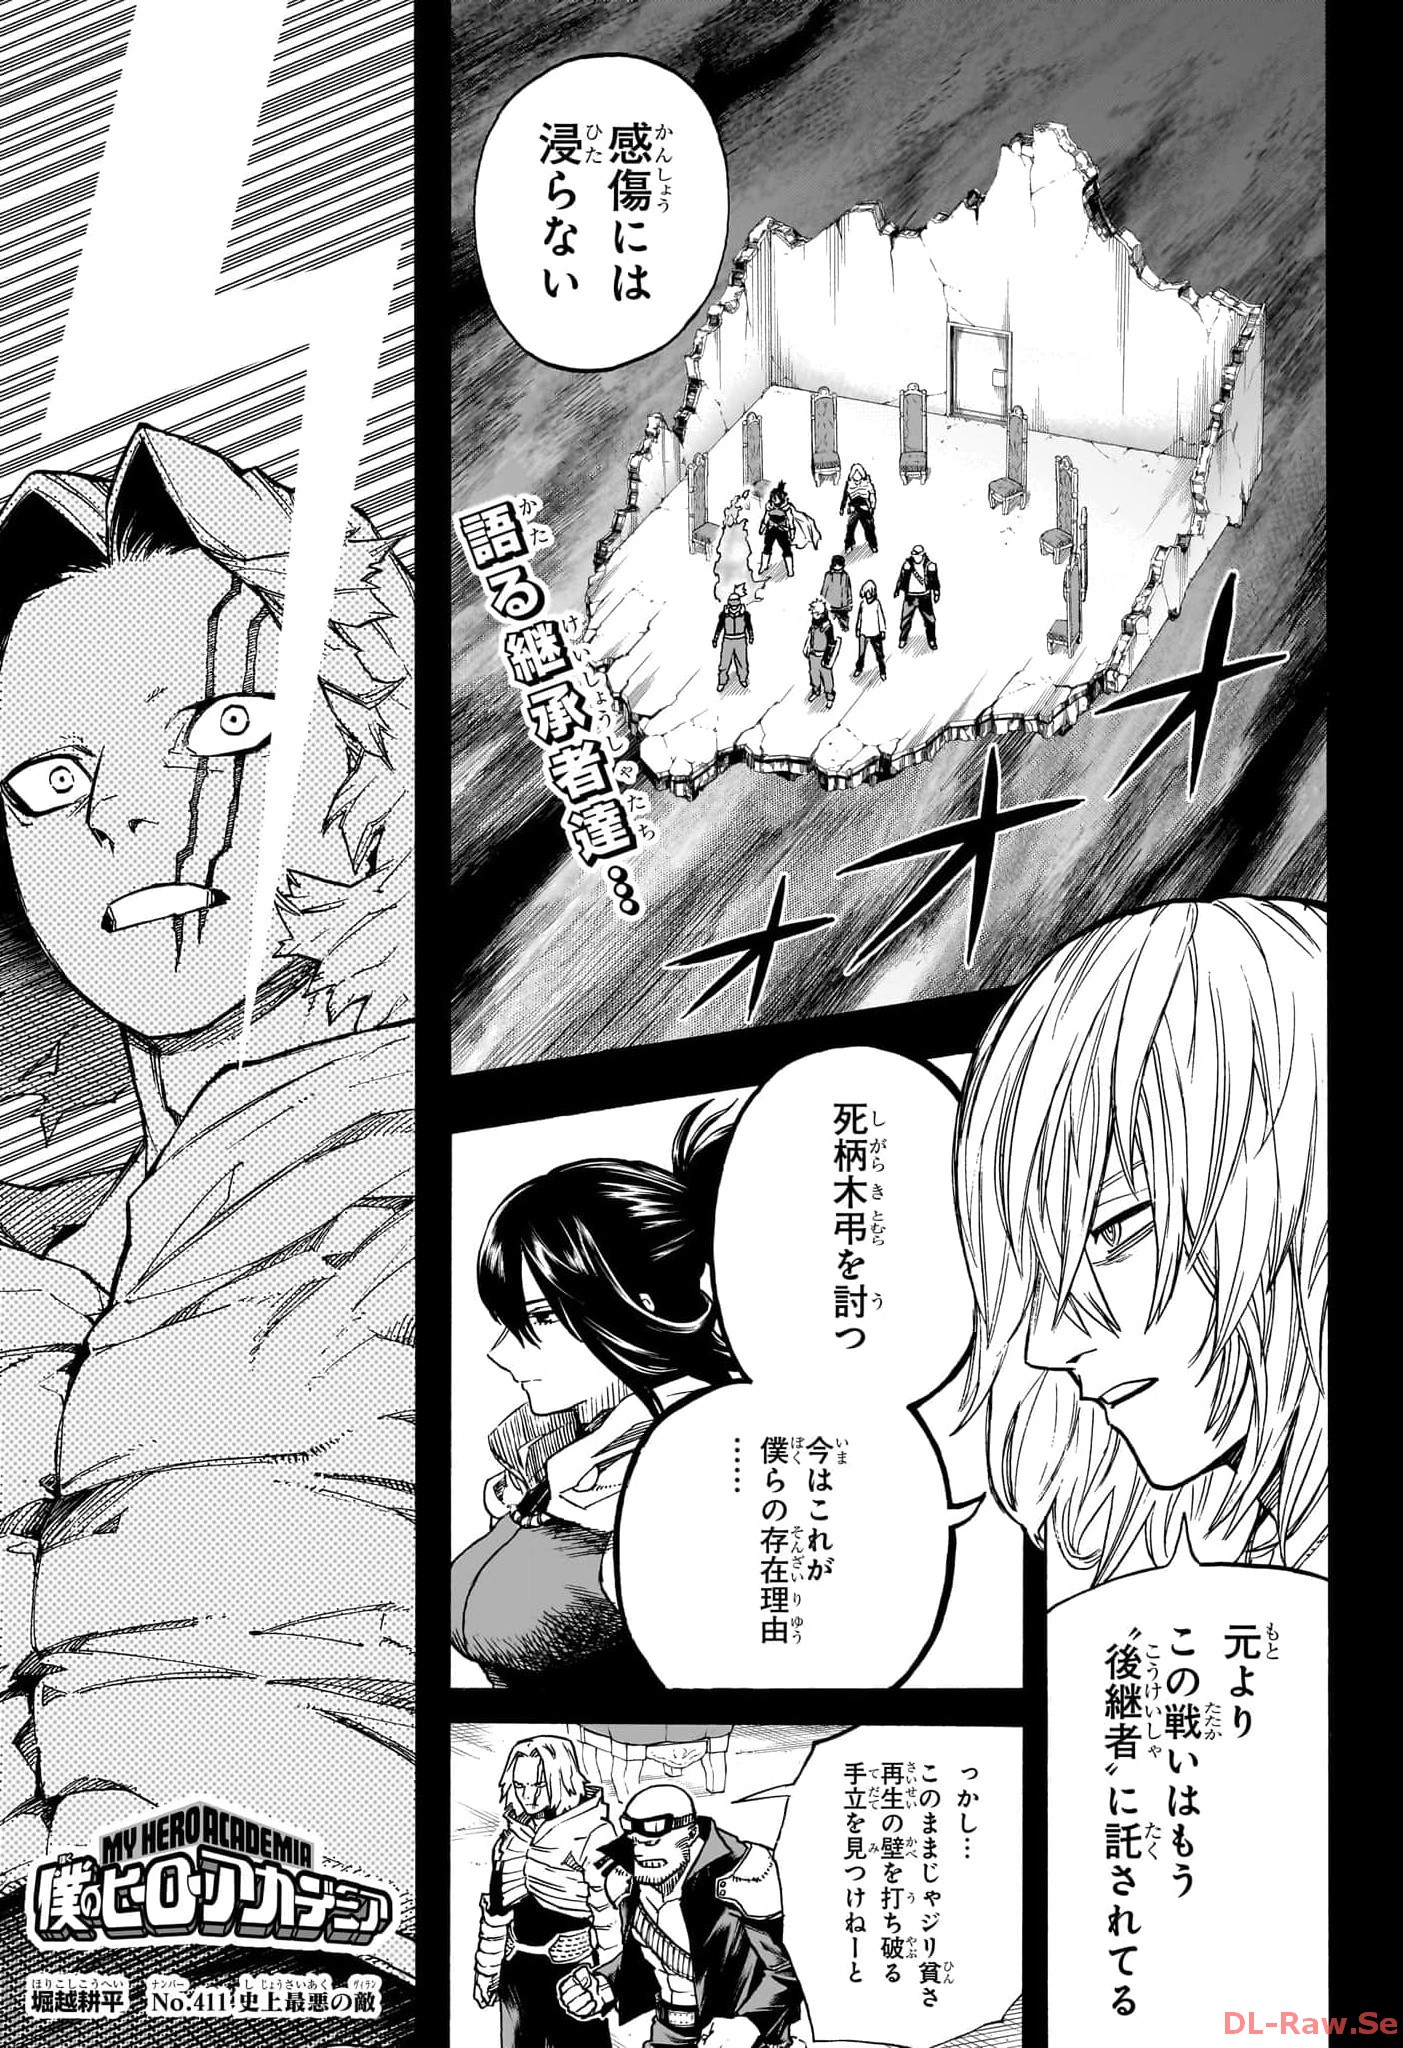 Boku no Hero Academia - Chapter 411 - Page 1